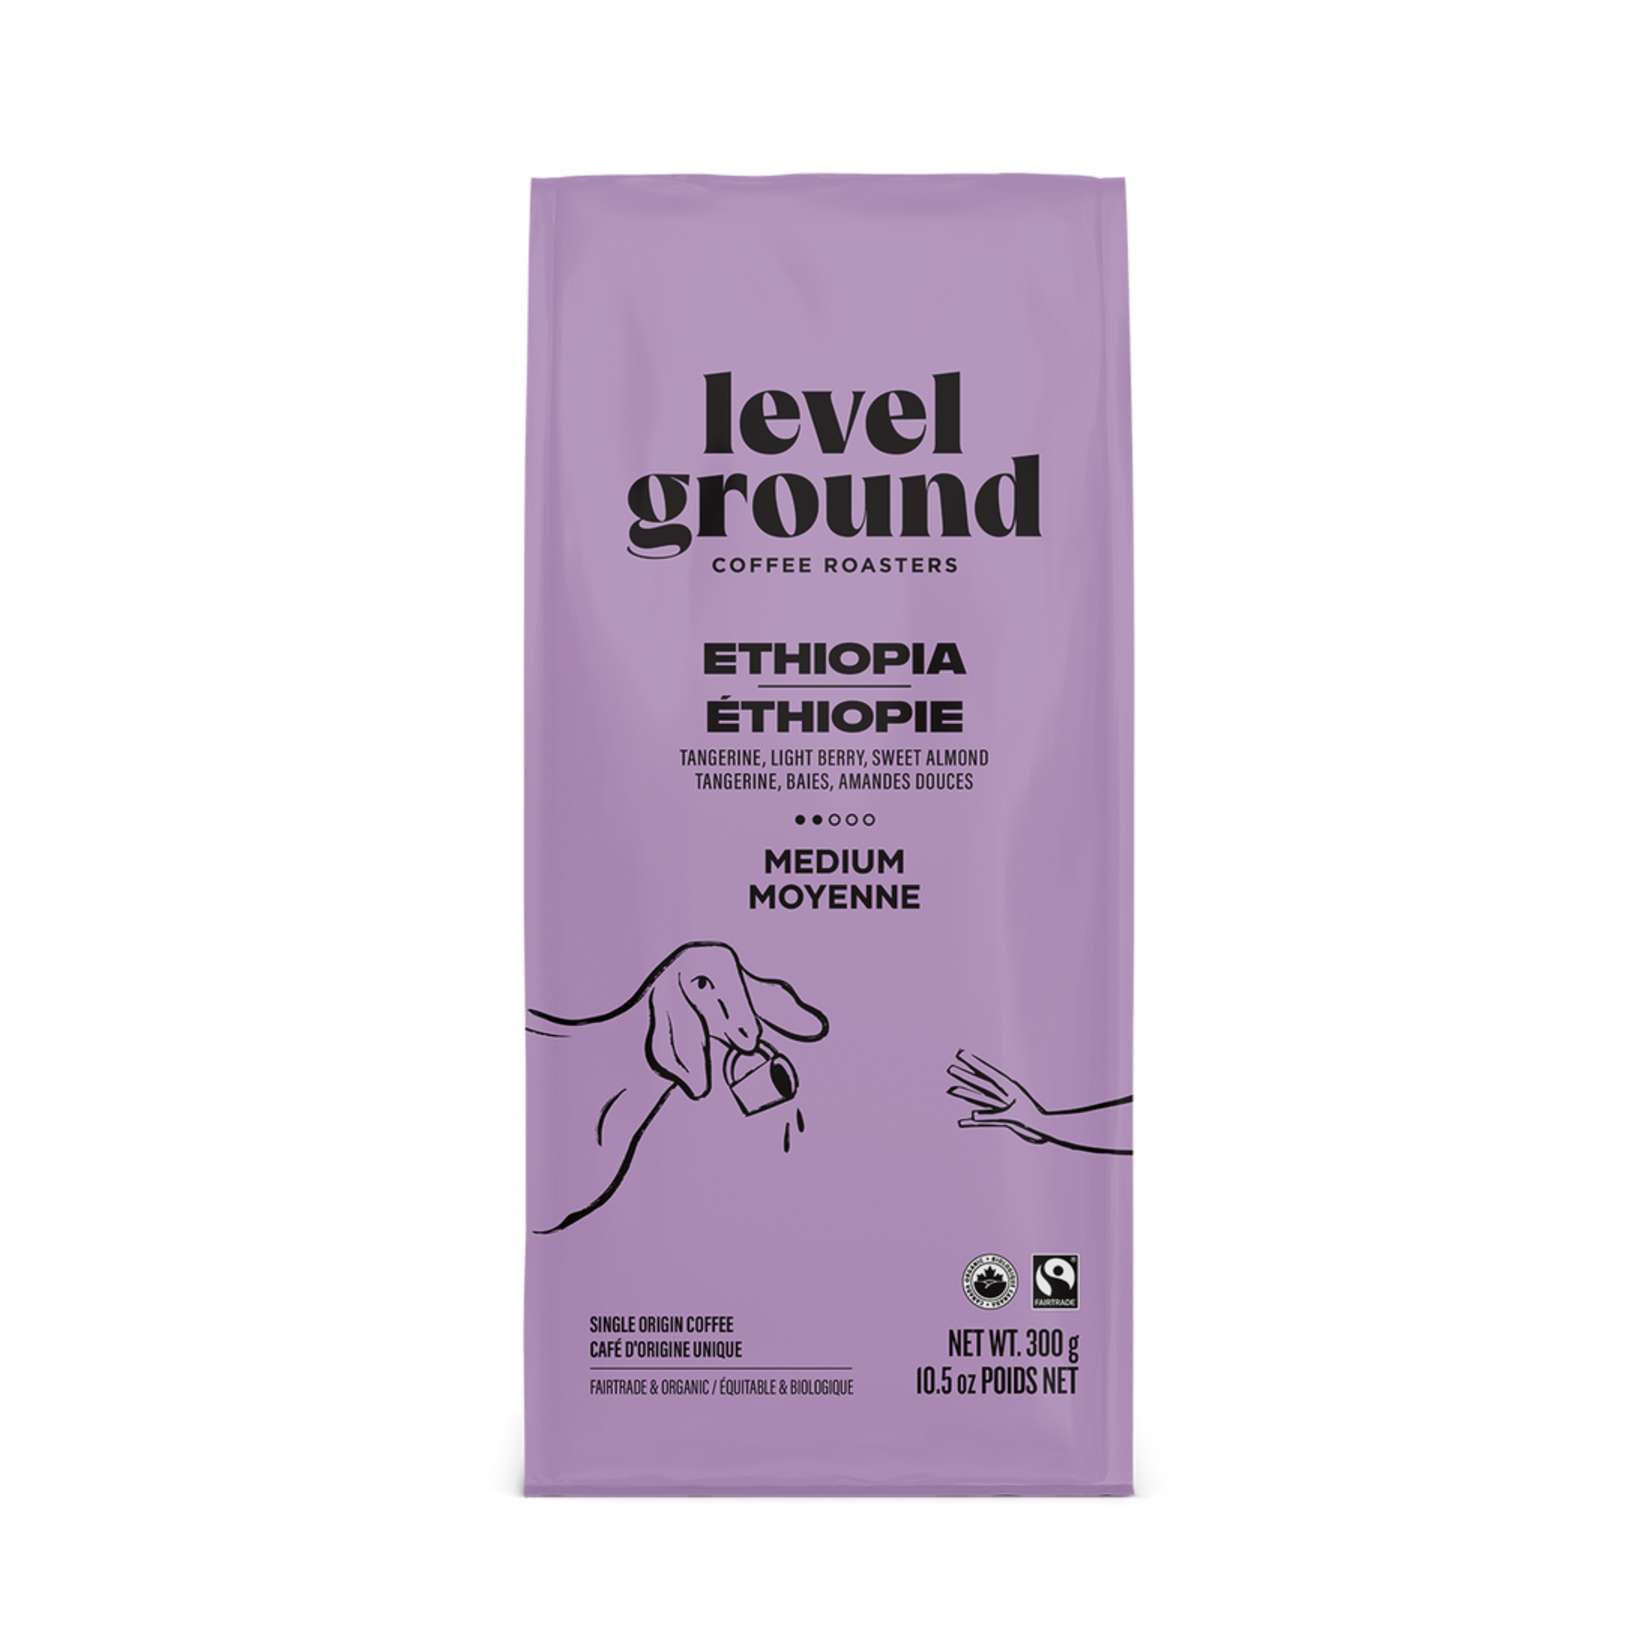 Level Ground Coffee - Level Ground Ethiopia Bean